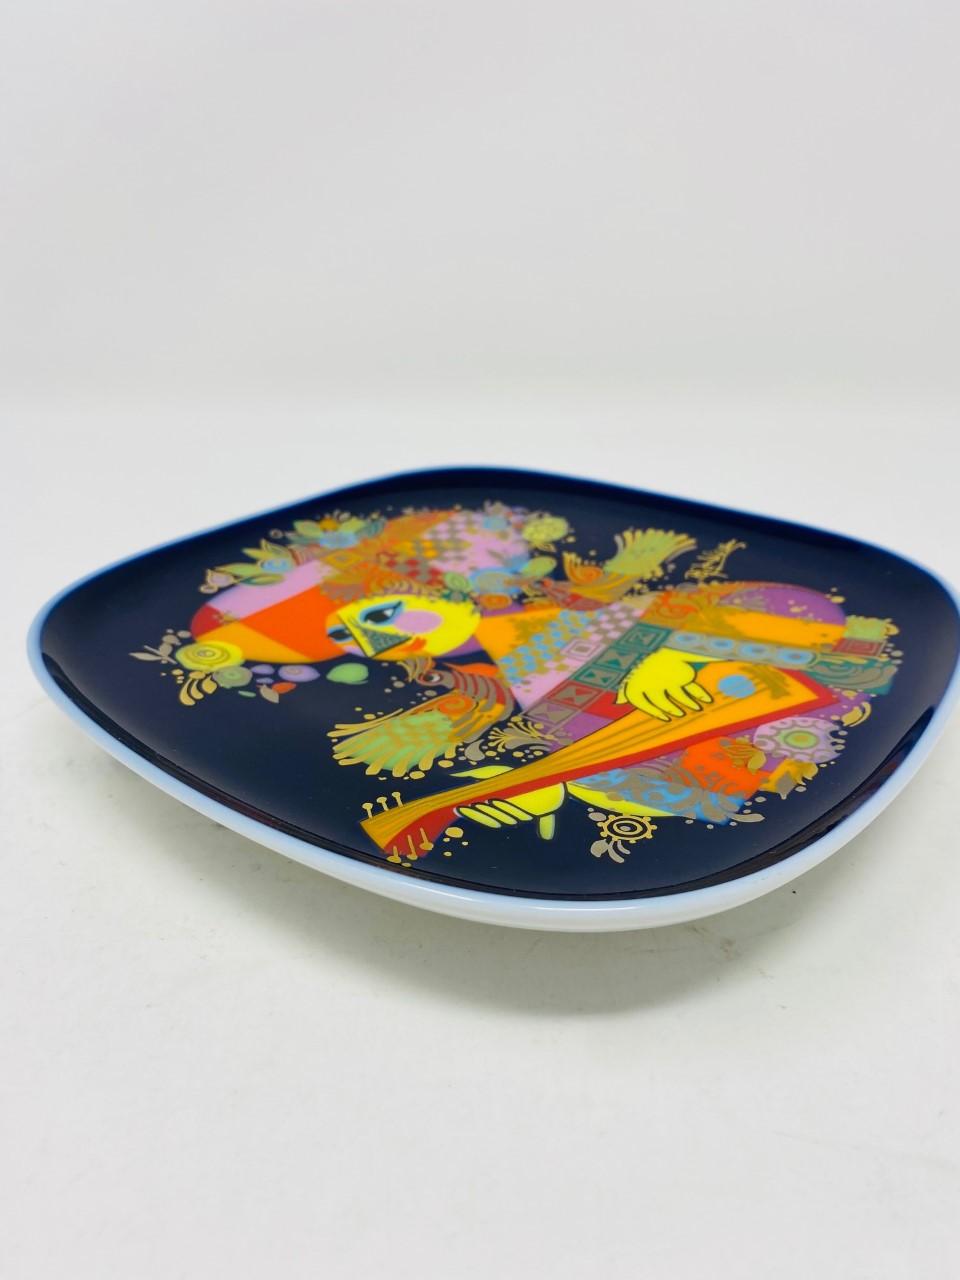 Porcelain Vintage Bjorn Wiindblad Decorative Plate 1001 Nights Lute Player Plate For Sale